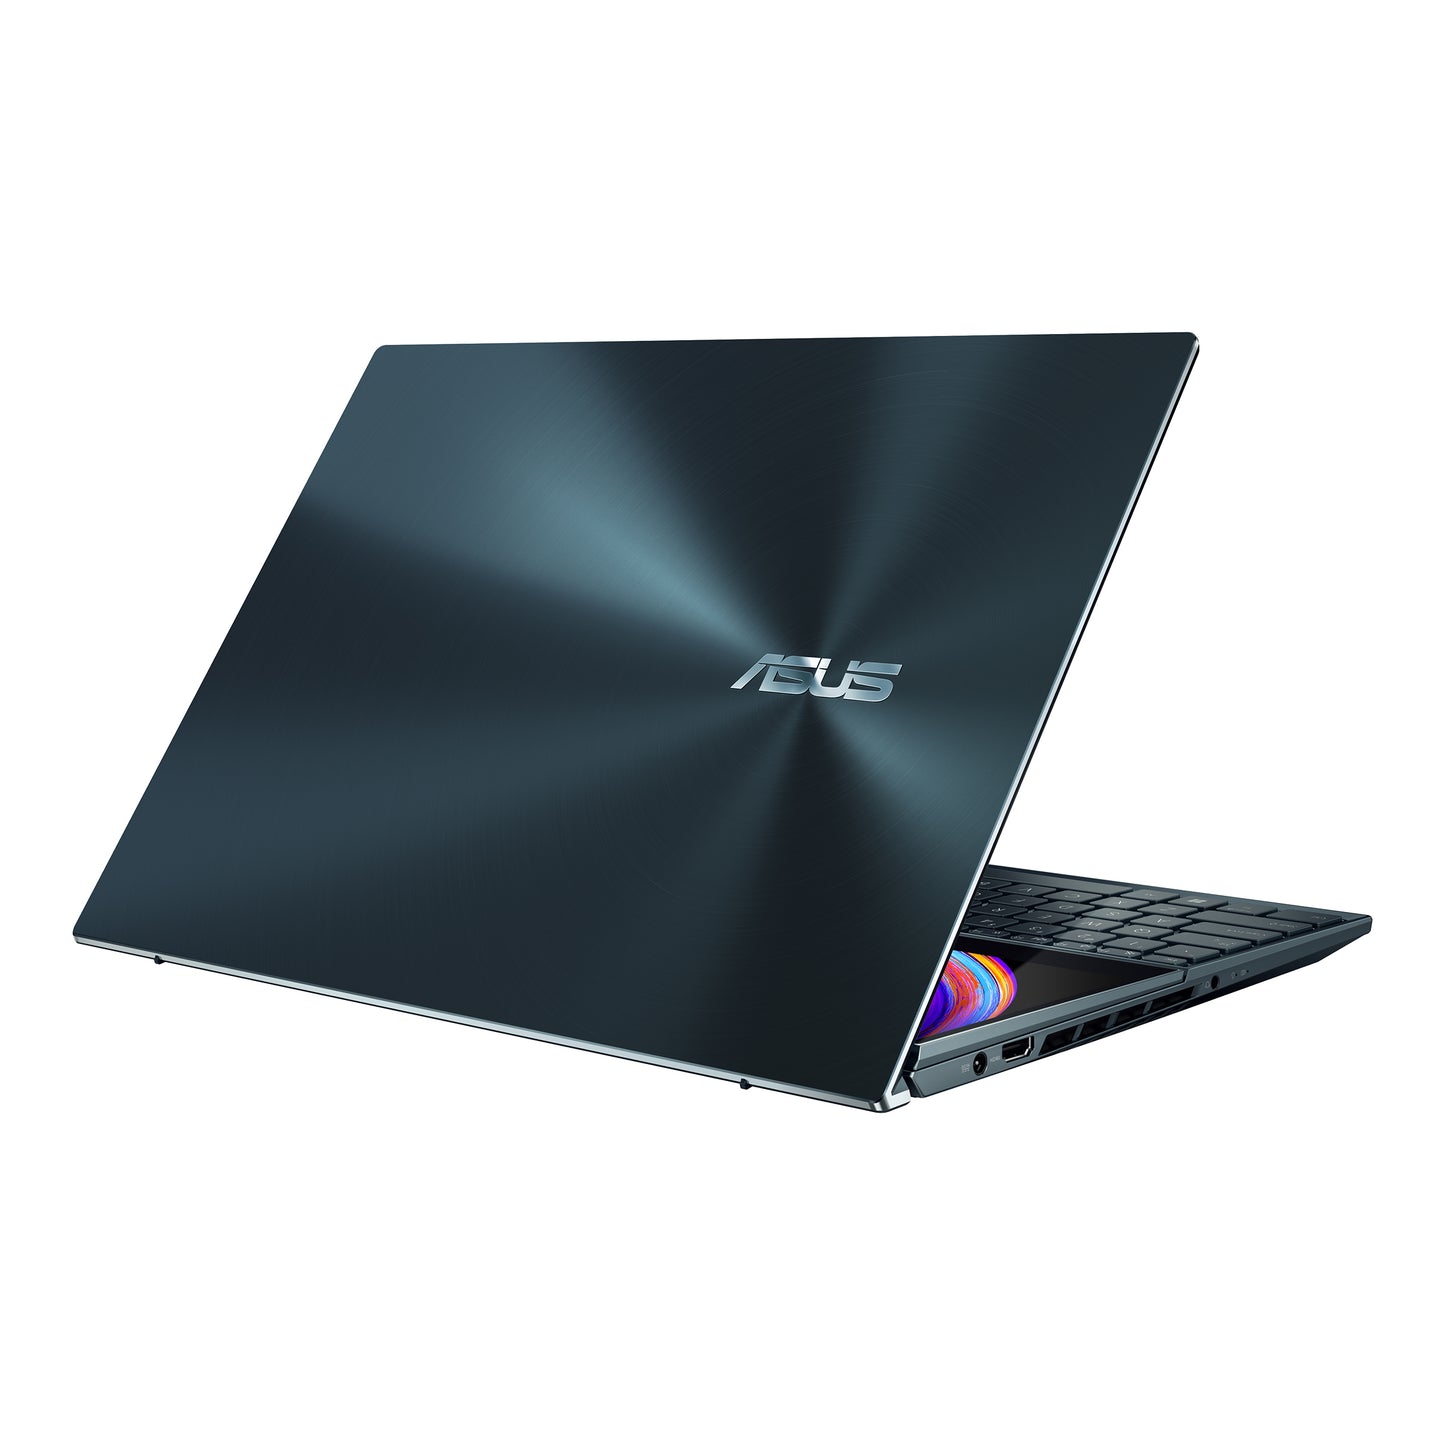 Asus ZenBook Pro Duo UX582Z i7-12700h Rtx 3060 Dual-Touchscreen Laptop (Brand New)